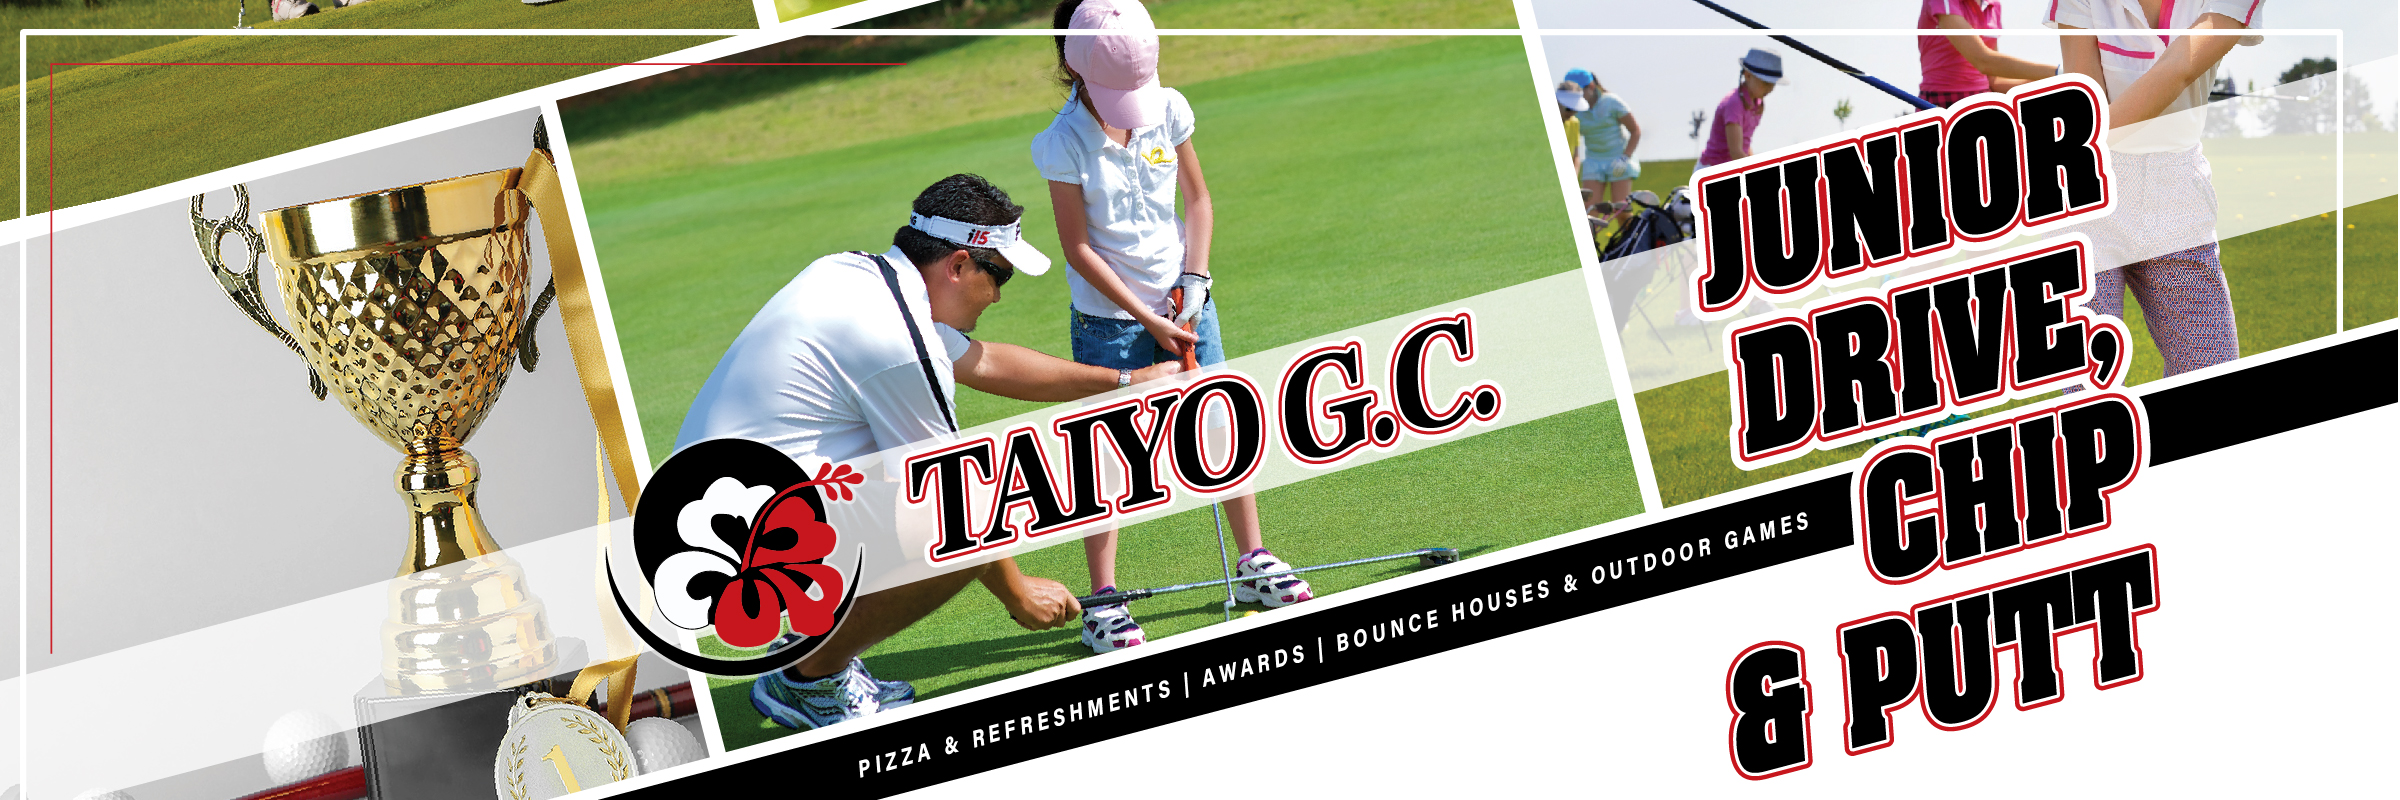 Taiyo GC Drive, Chip, and Putt Clinic